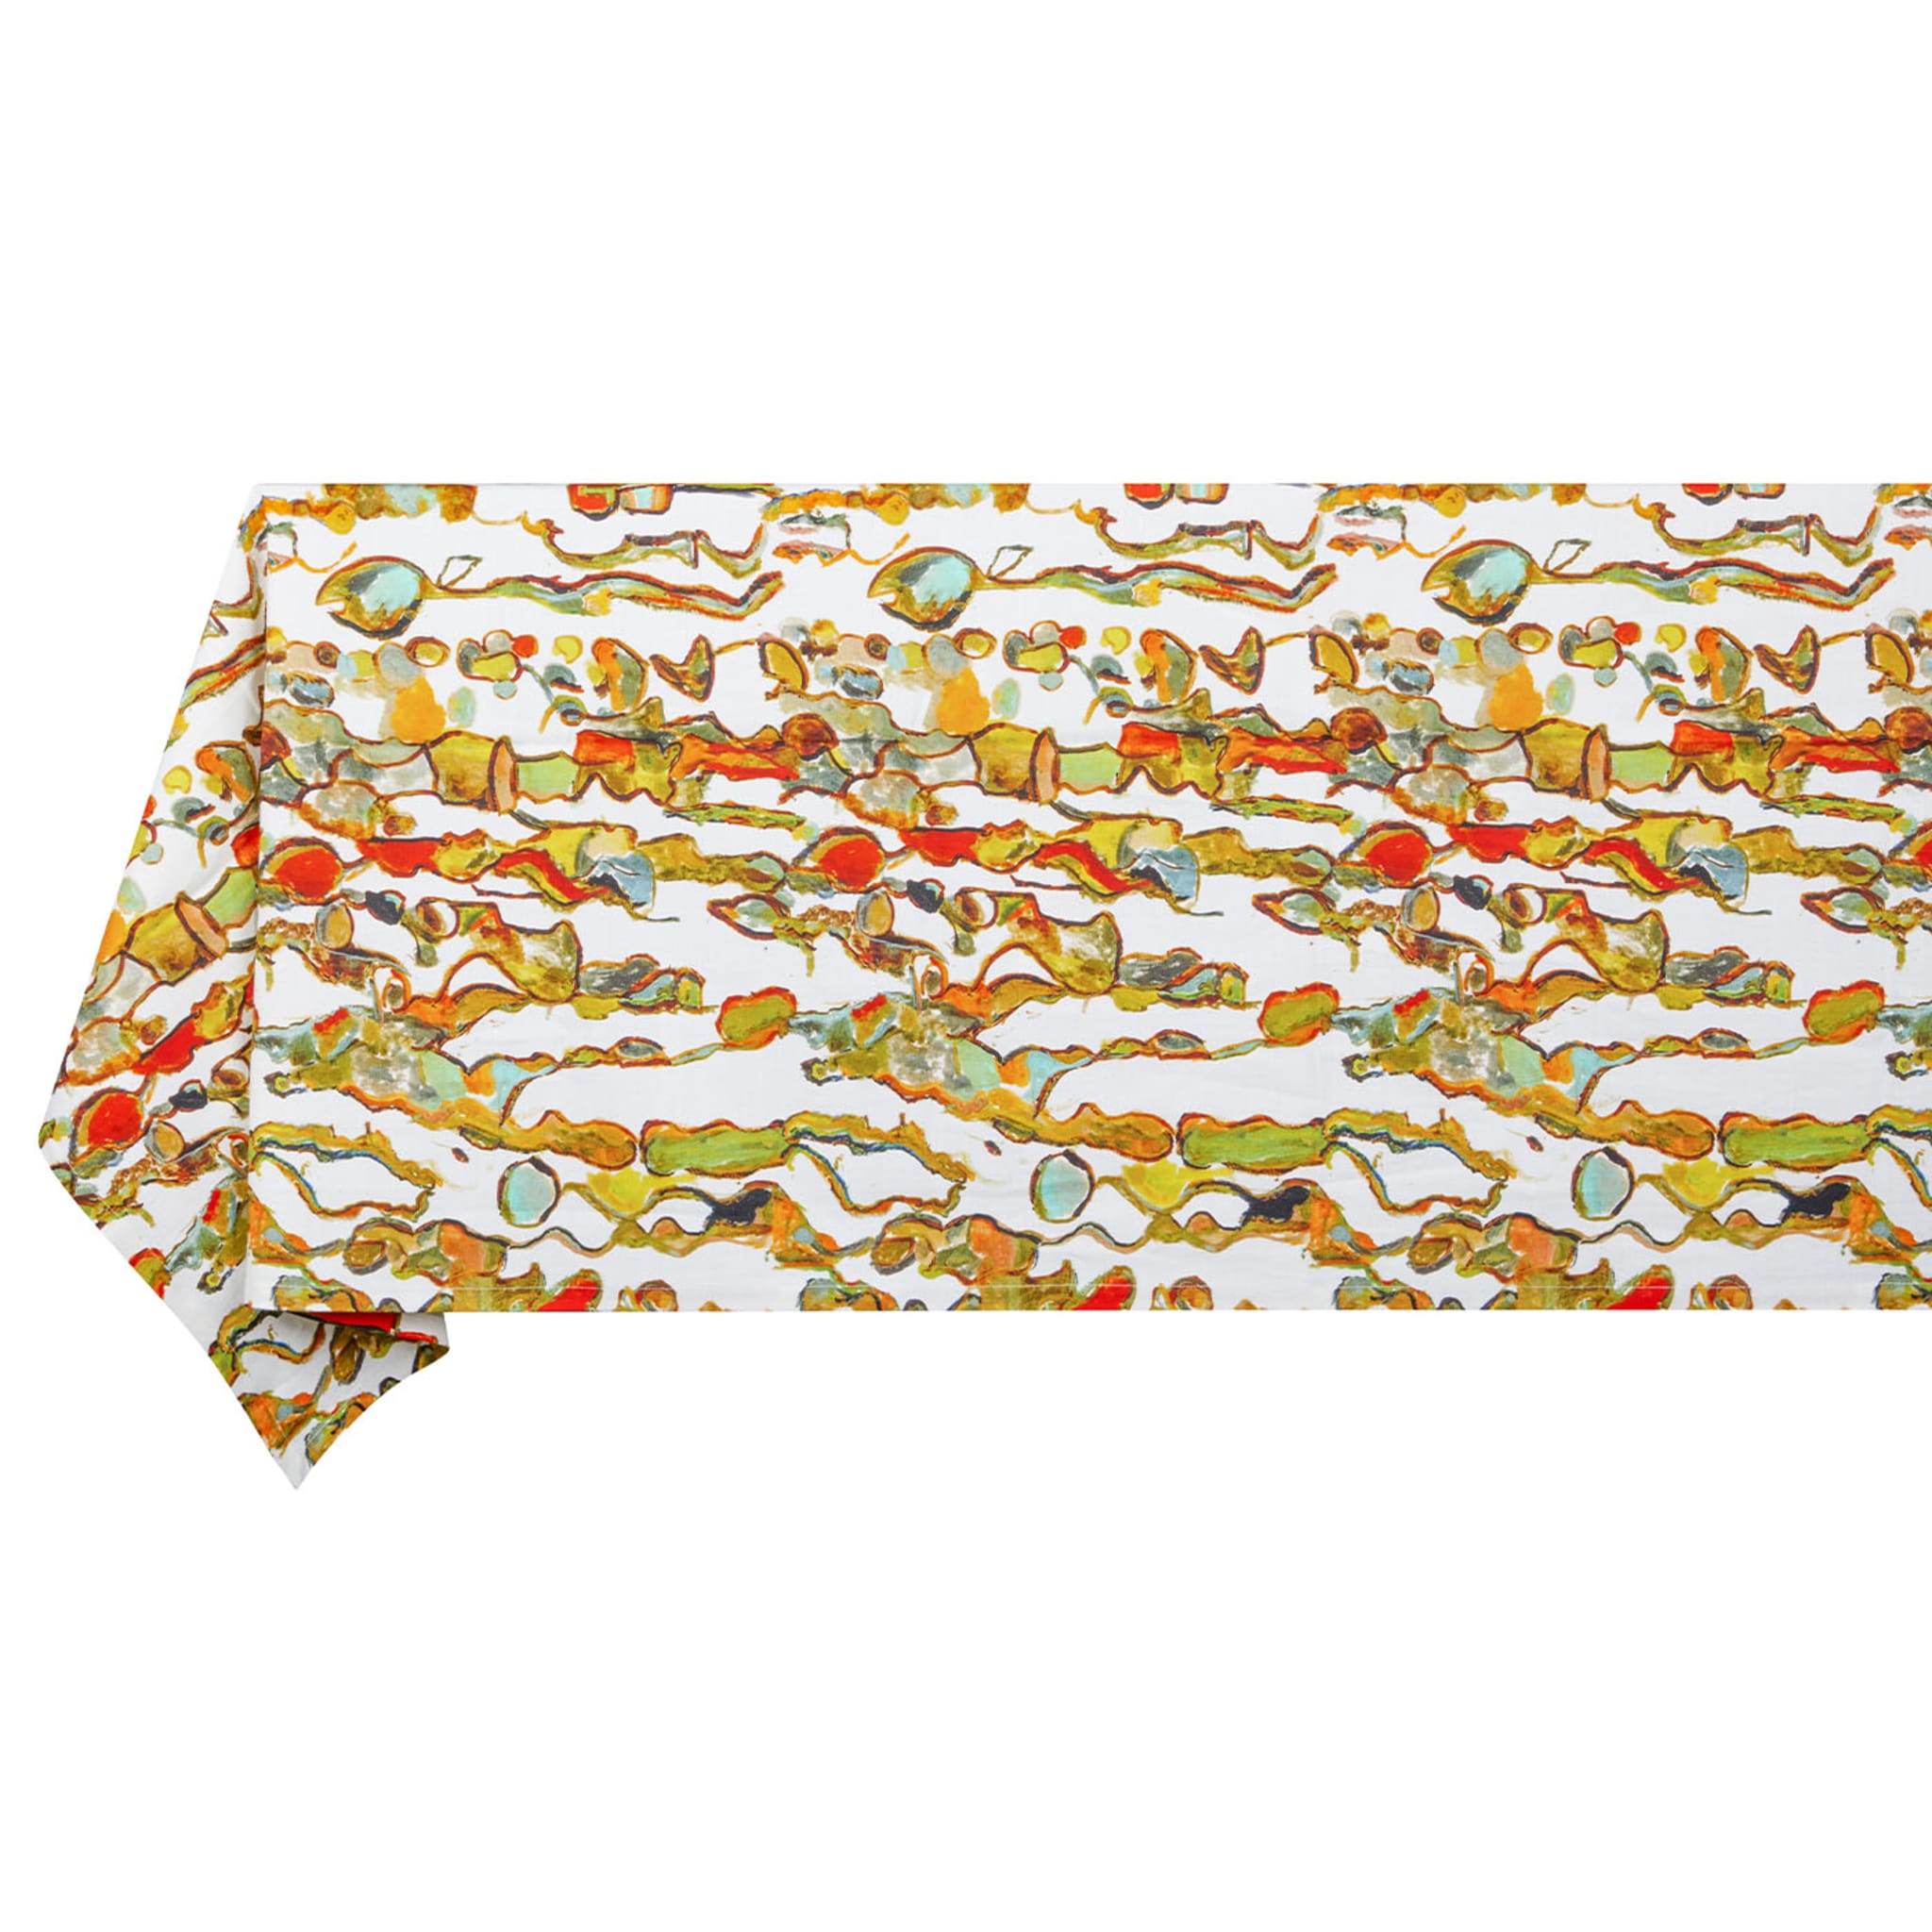 Stromboli linen cotton Tablecloth - Alternative view 1